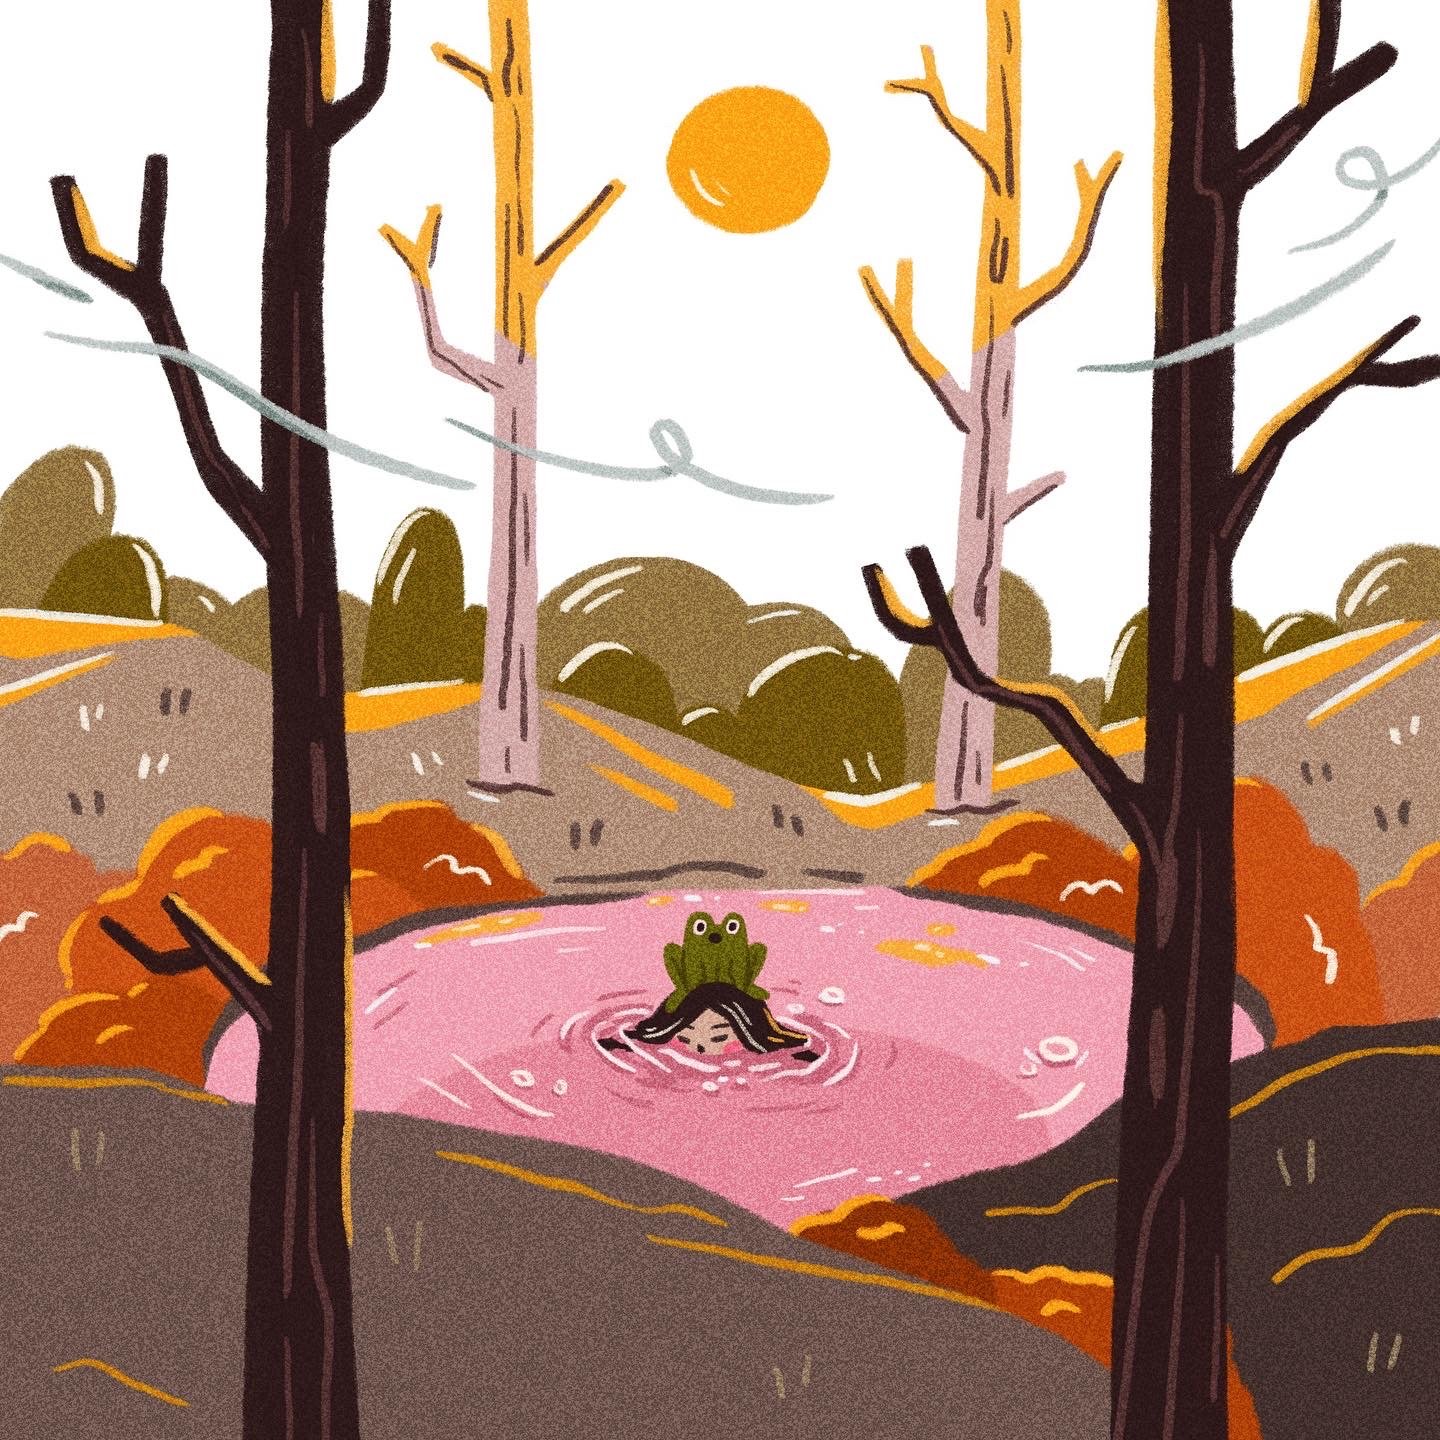 Illustration for Peachtober '23 prompt "Pond"